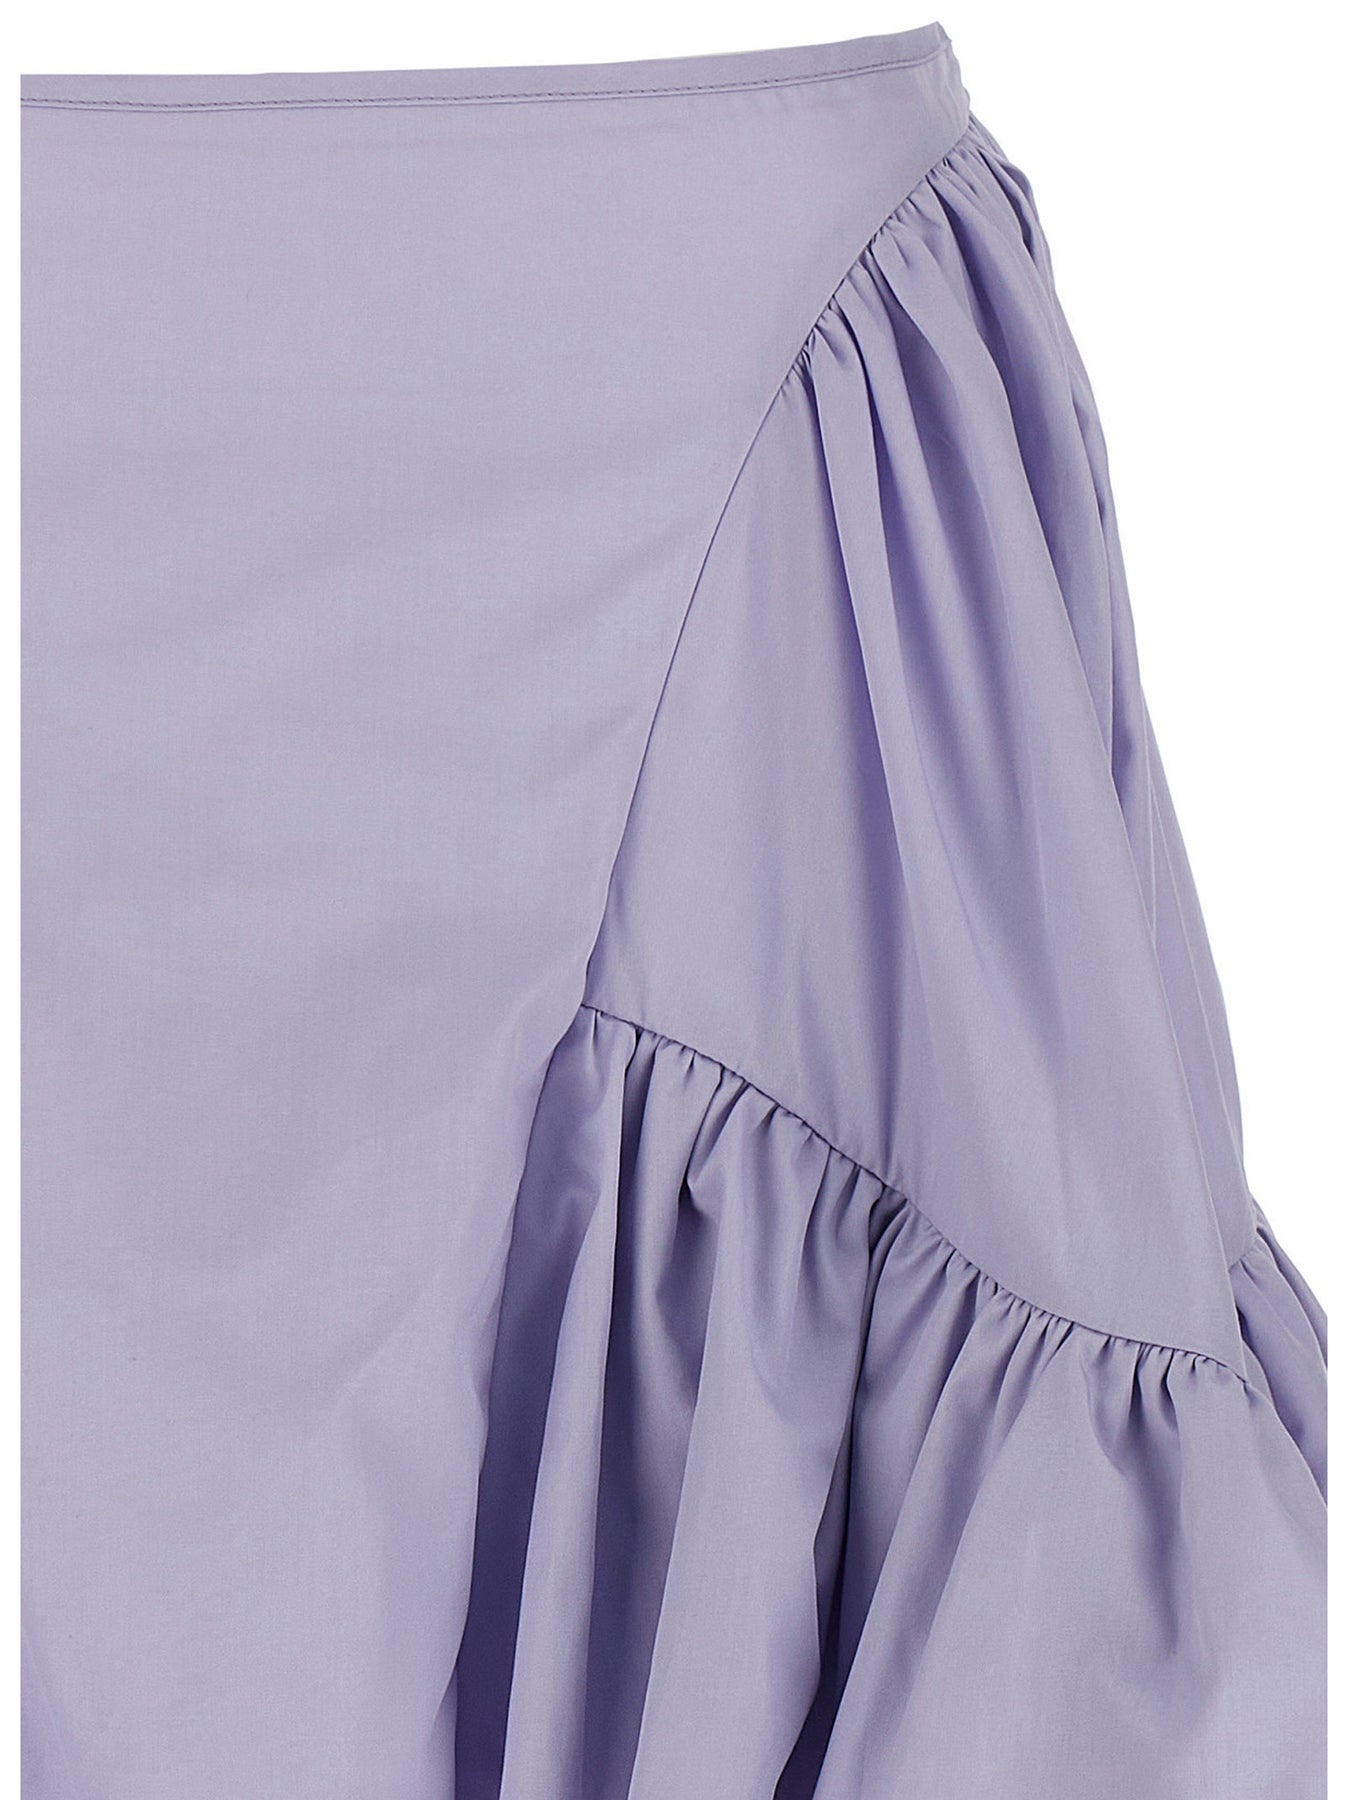 Damara Skirts Purple - 3